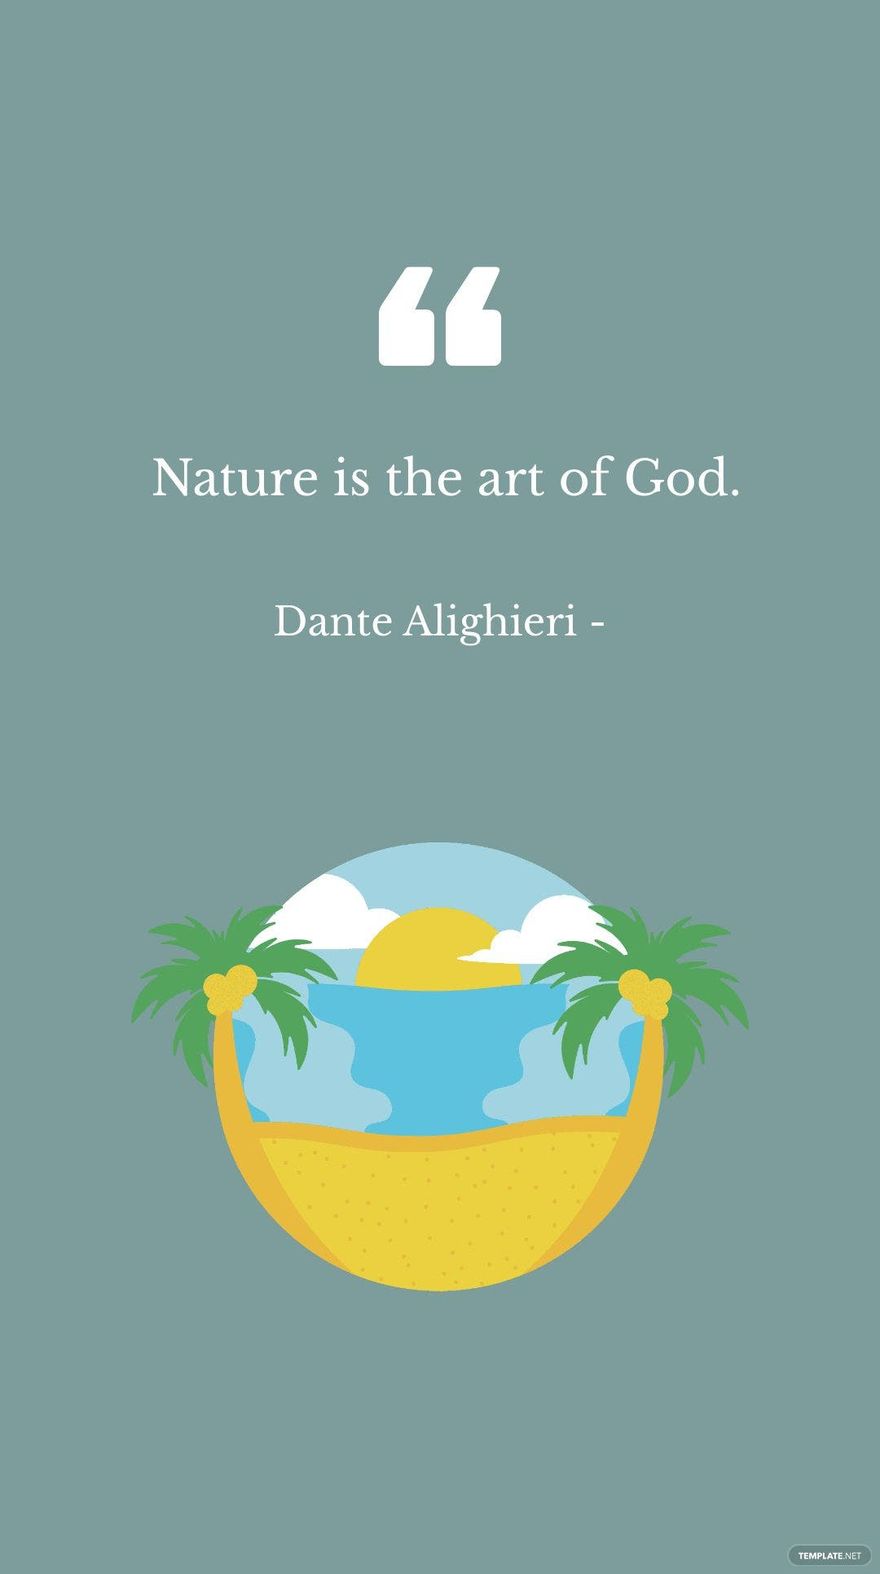 Dante Alighieri - Nature is the art of God.